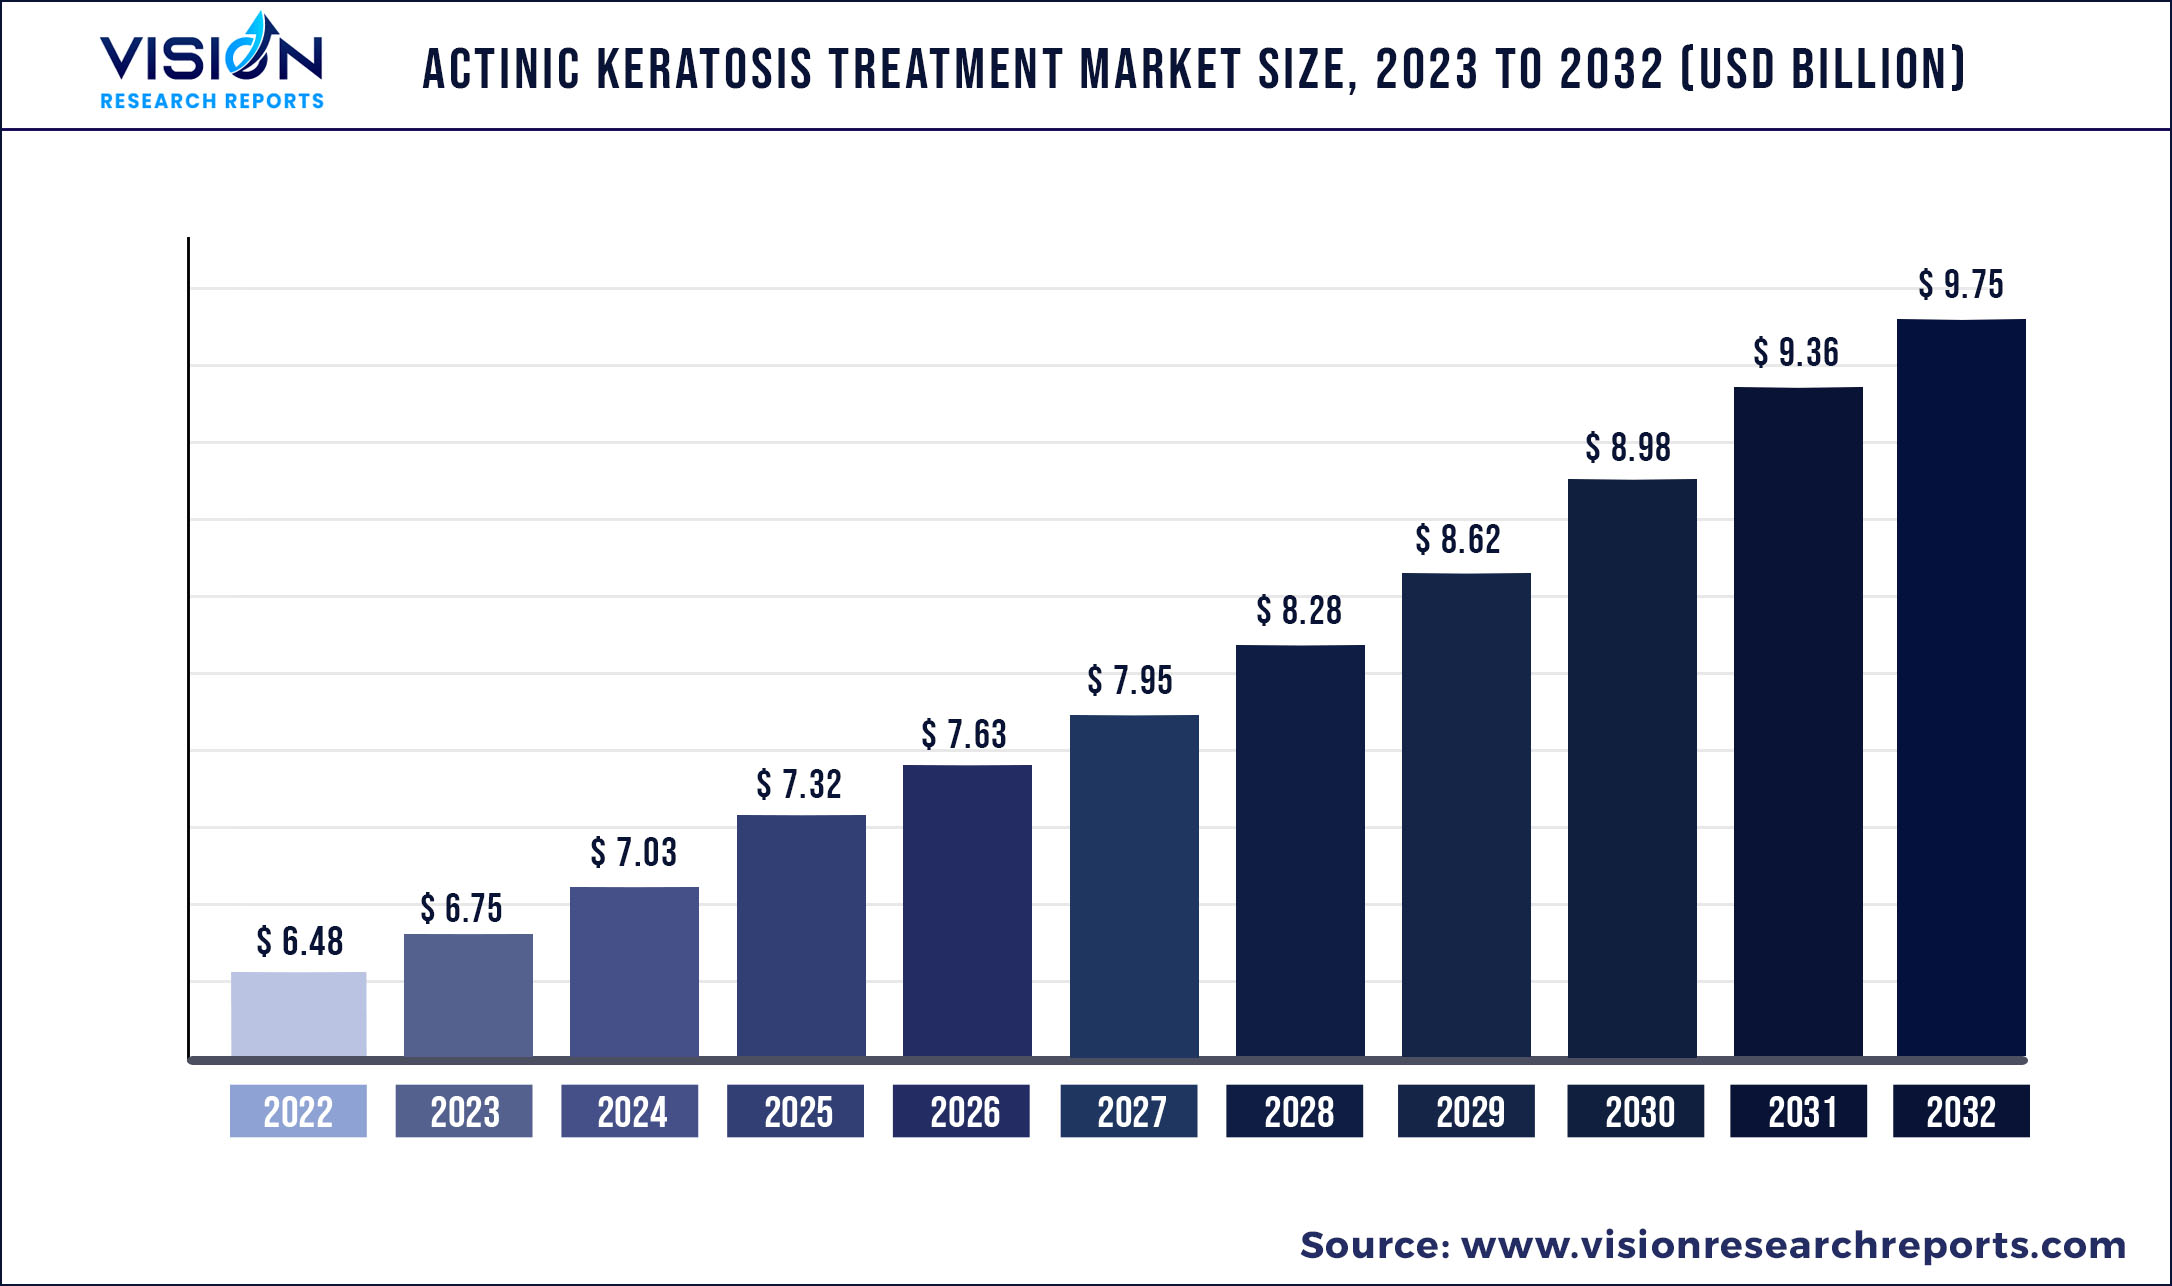 Actinic Keratosis Treatment Market Size 2023 to 2032